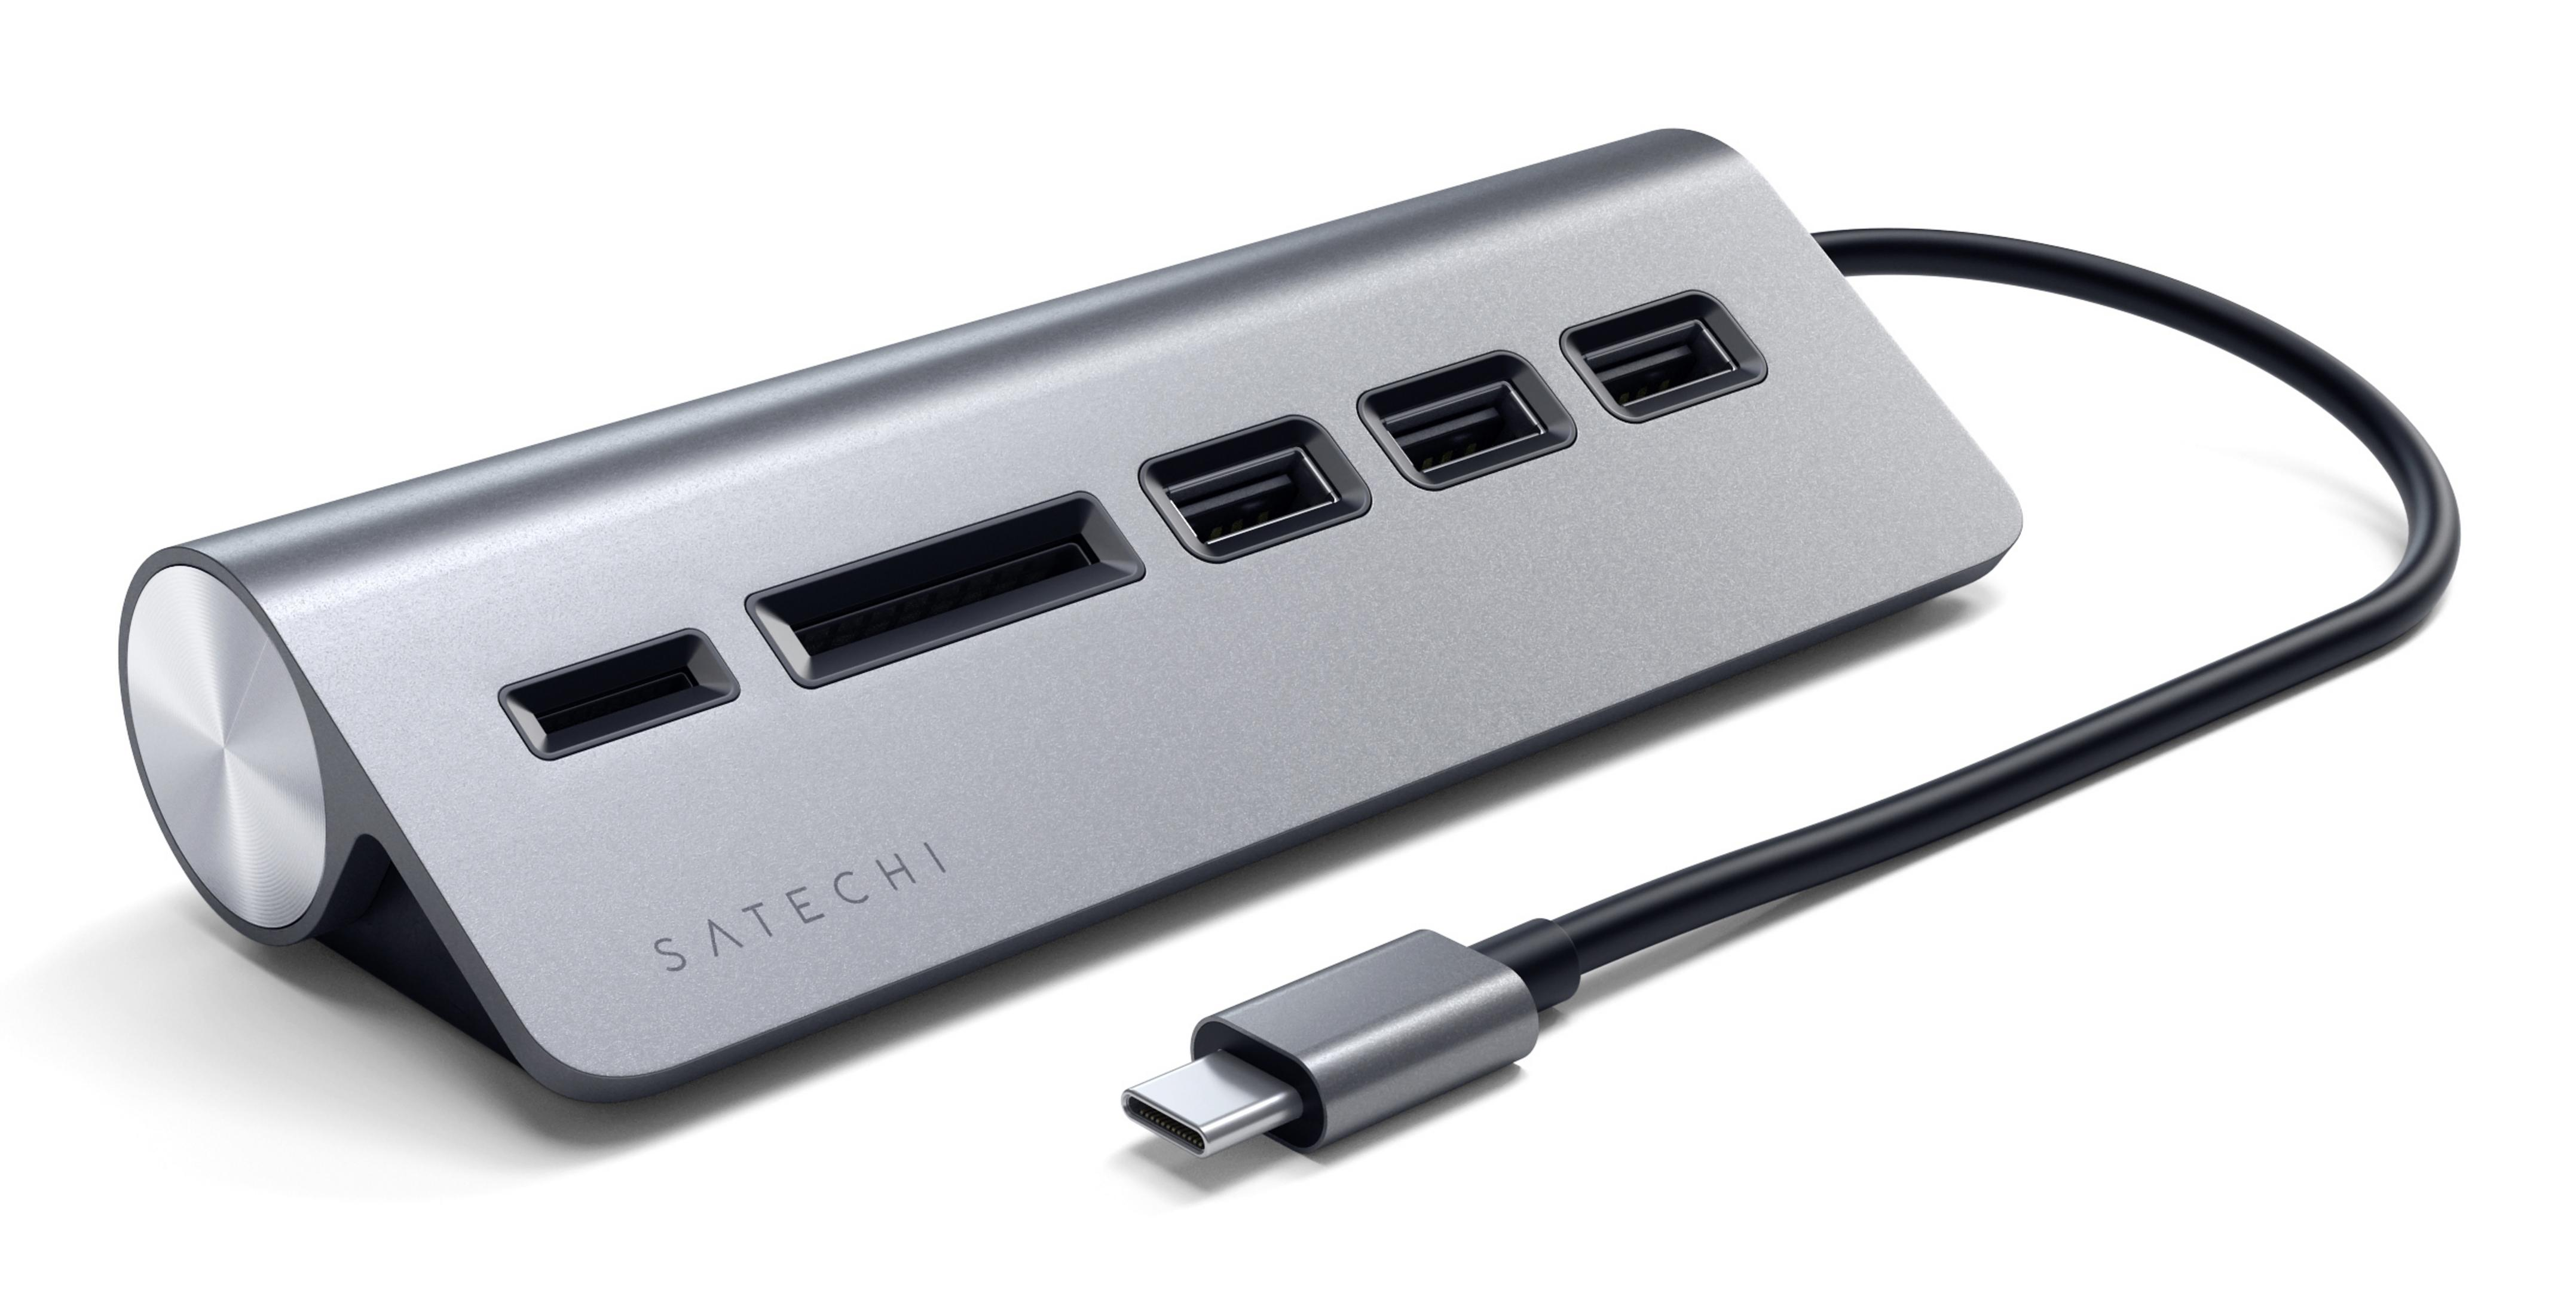 SATECHI ST-TCHCRM Hub R. Dunkelgrau USB ALUMINIUM USB TYPE-C Kartenleser, HUB&CARD GREY und